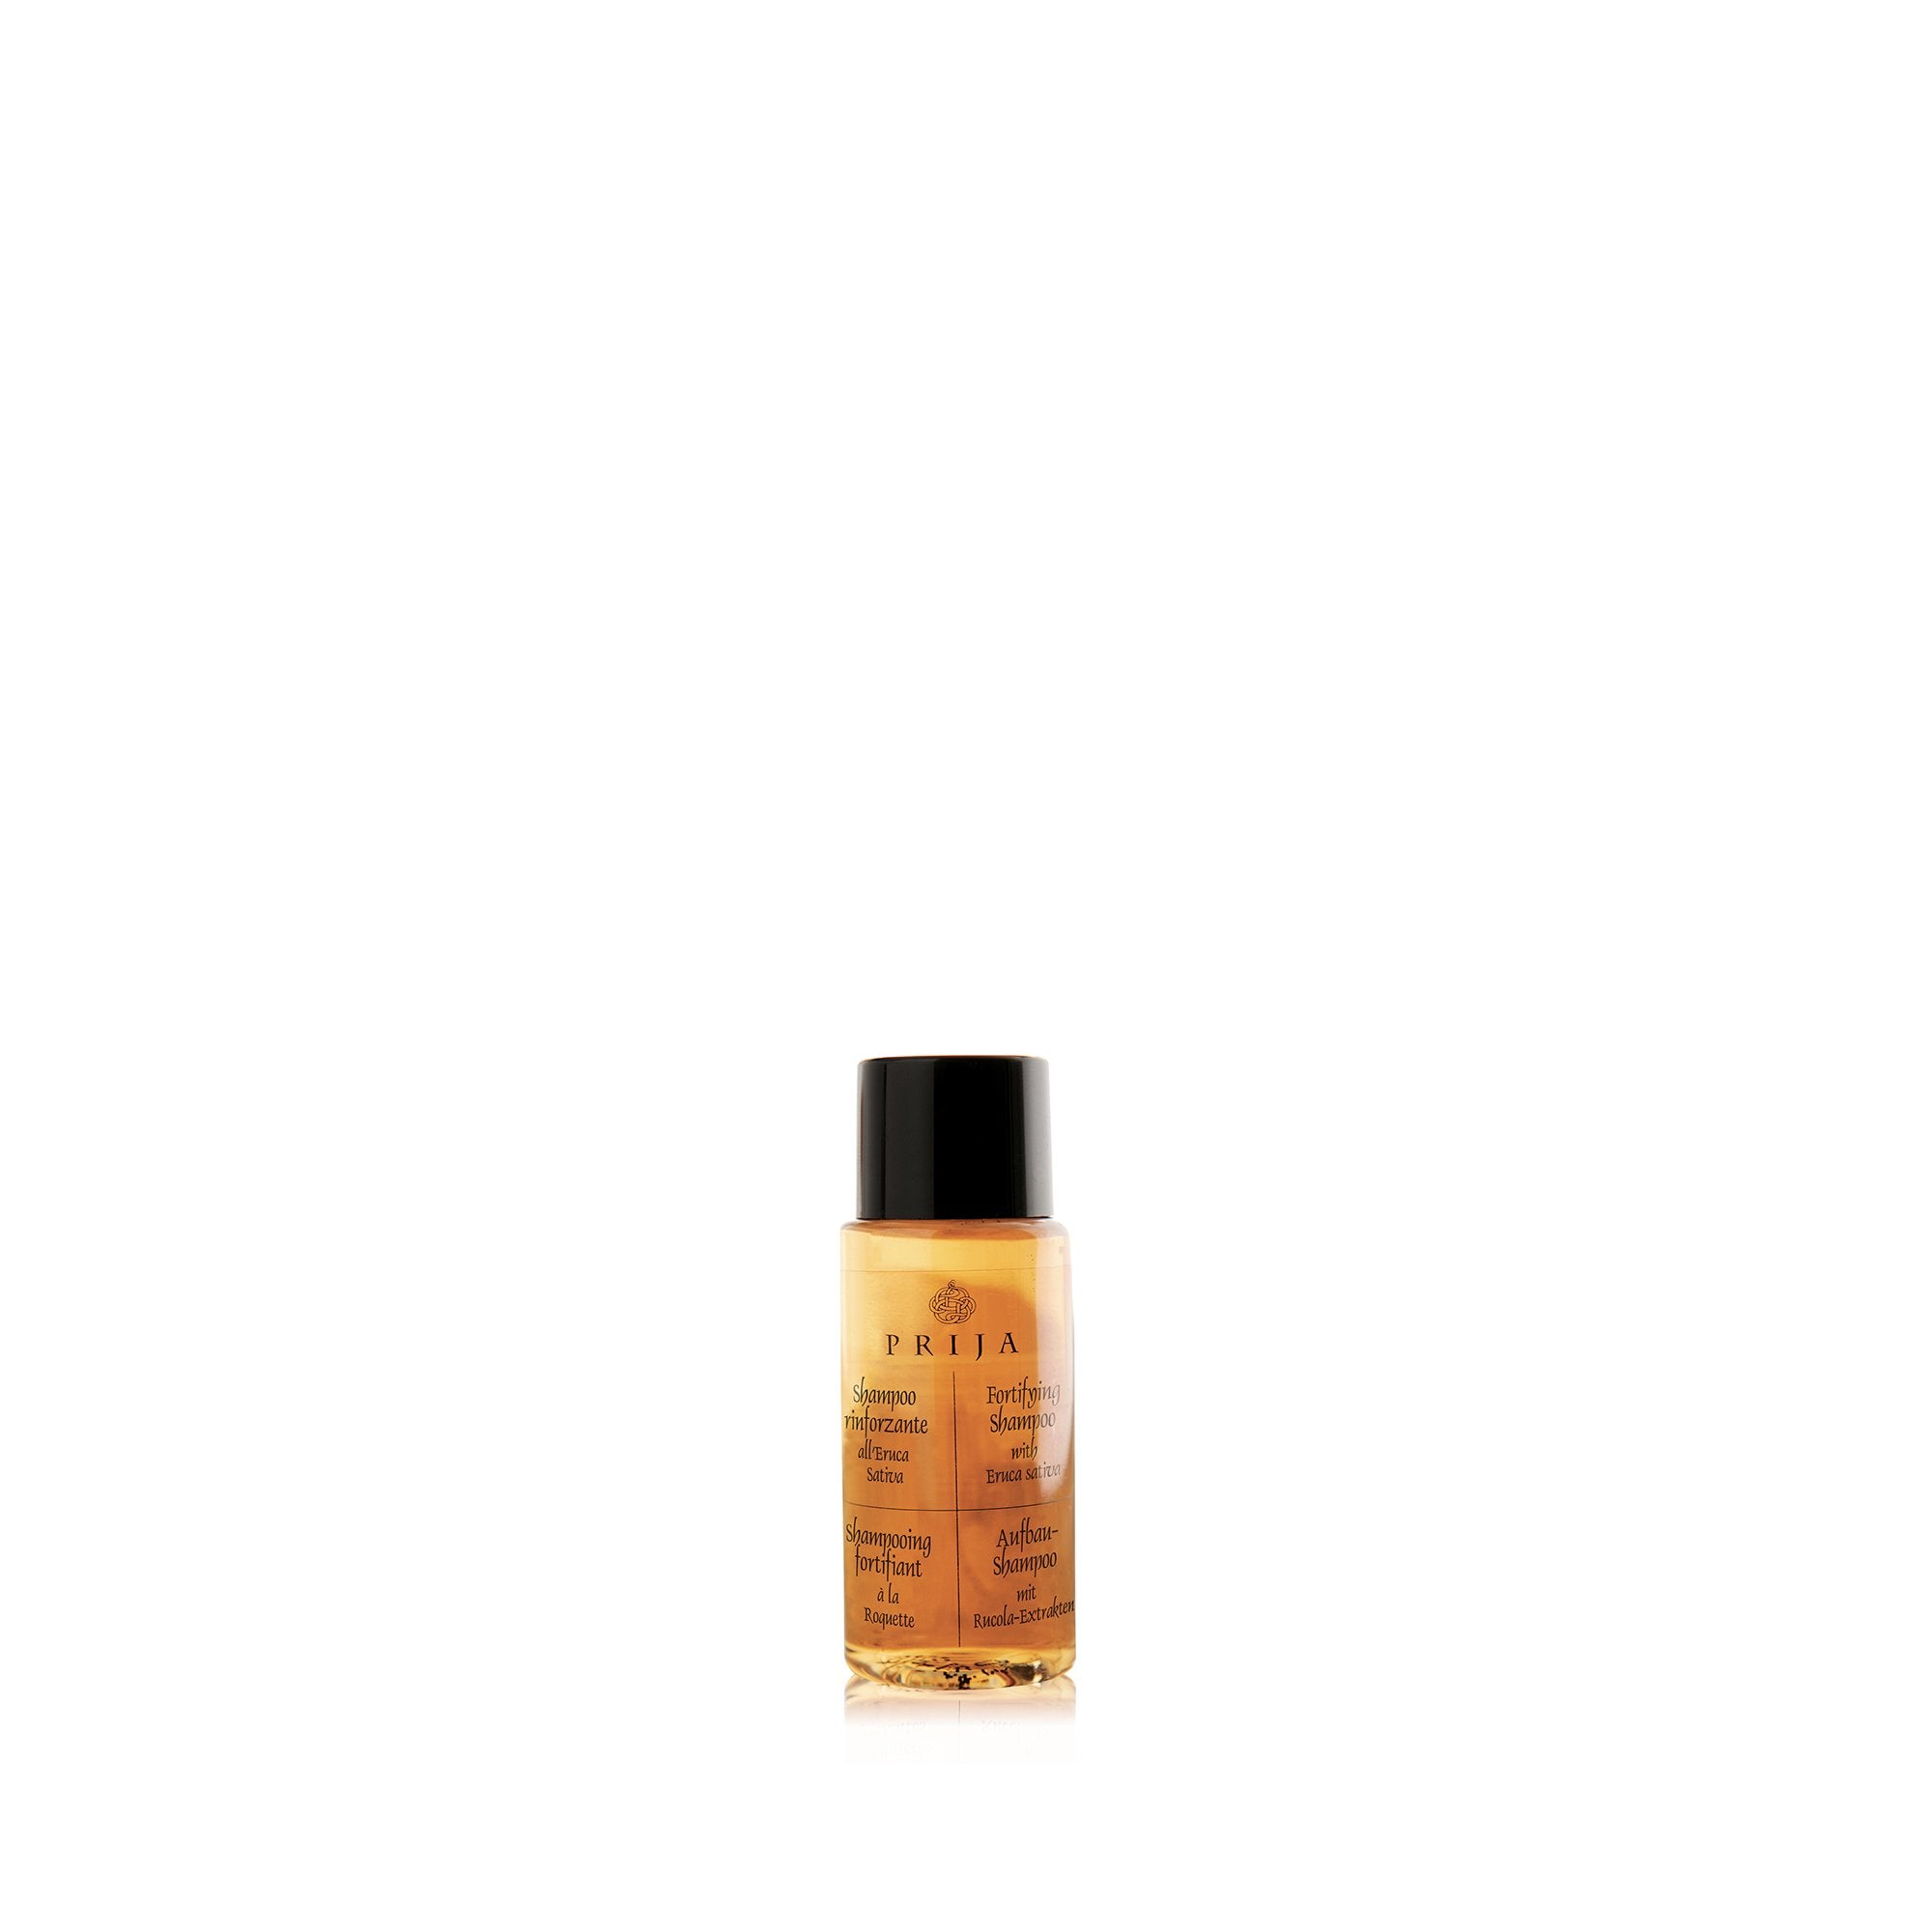 Prija fortifying shampoo (40 ml)